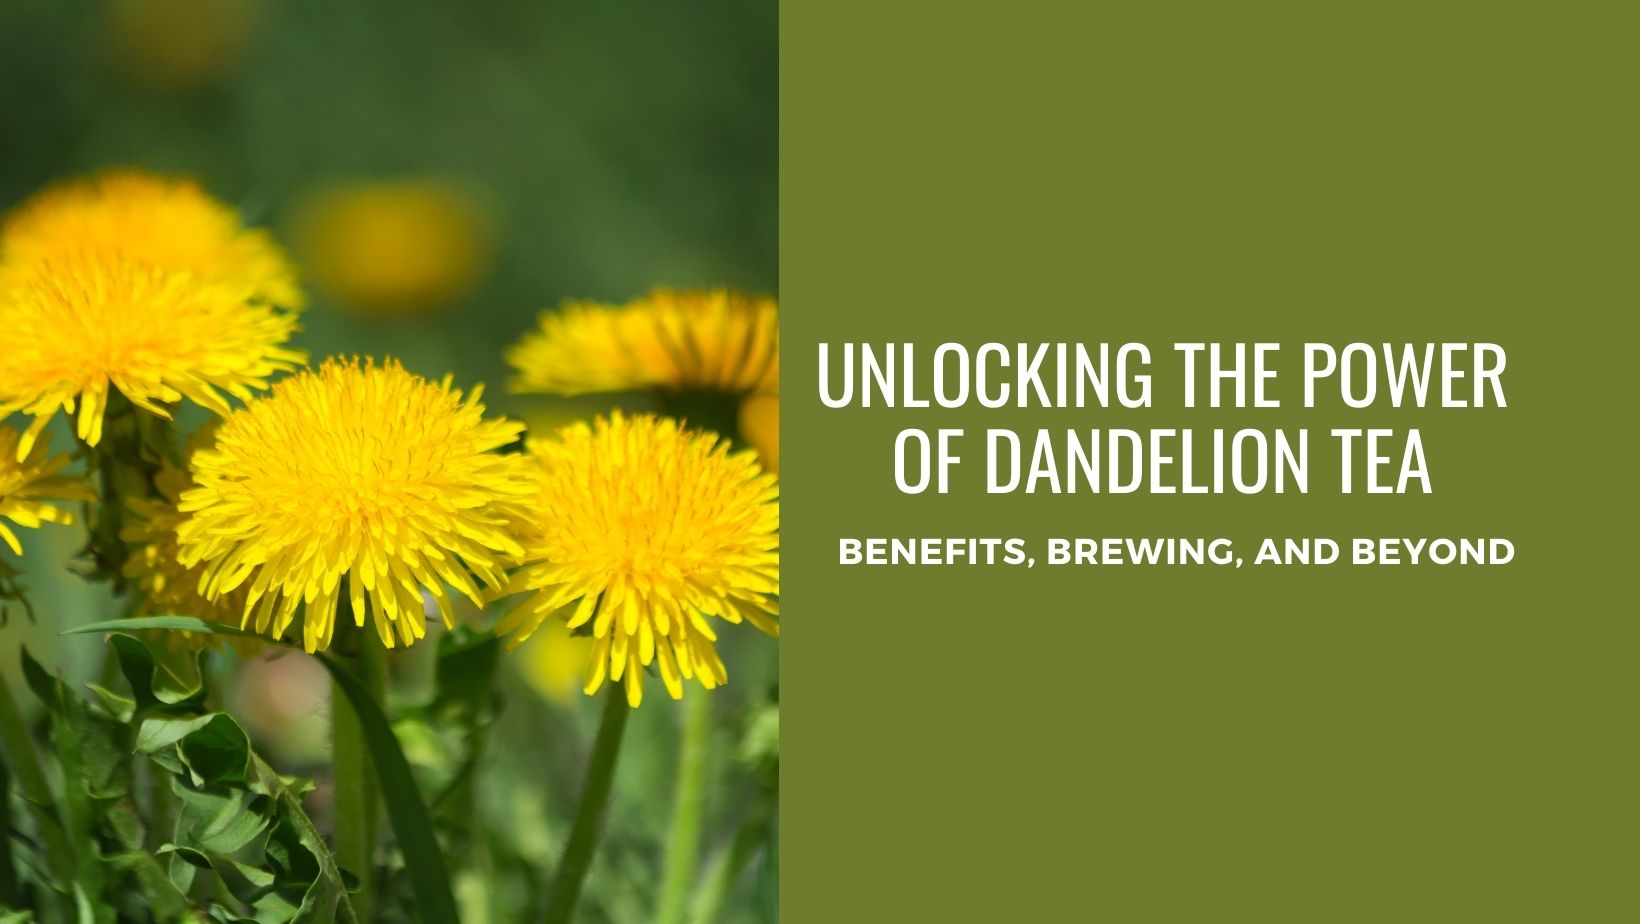 Dandelion Tea - Benefits, Brewing, and Beyond